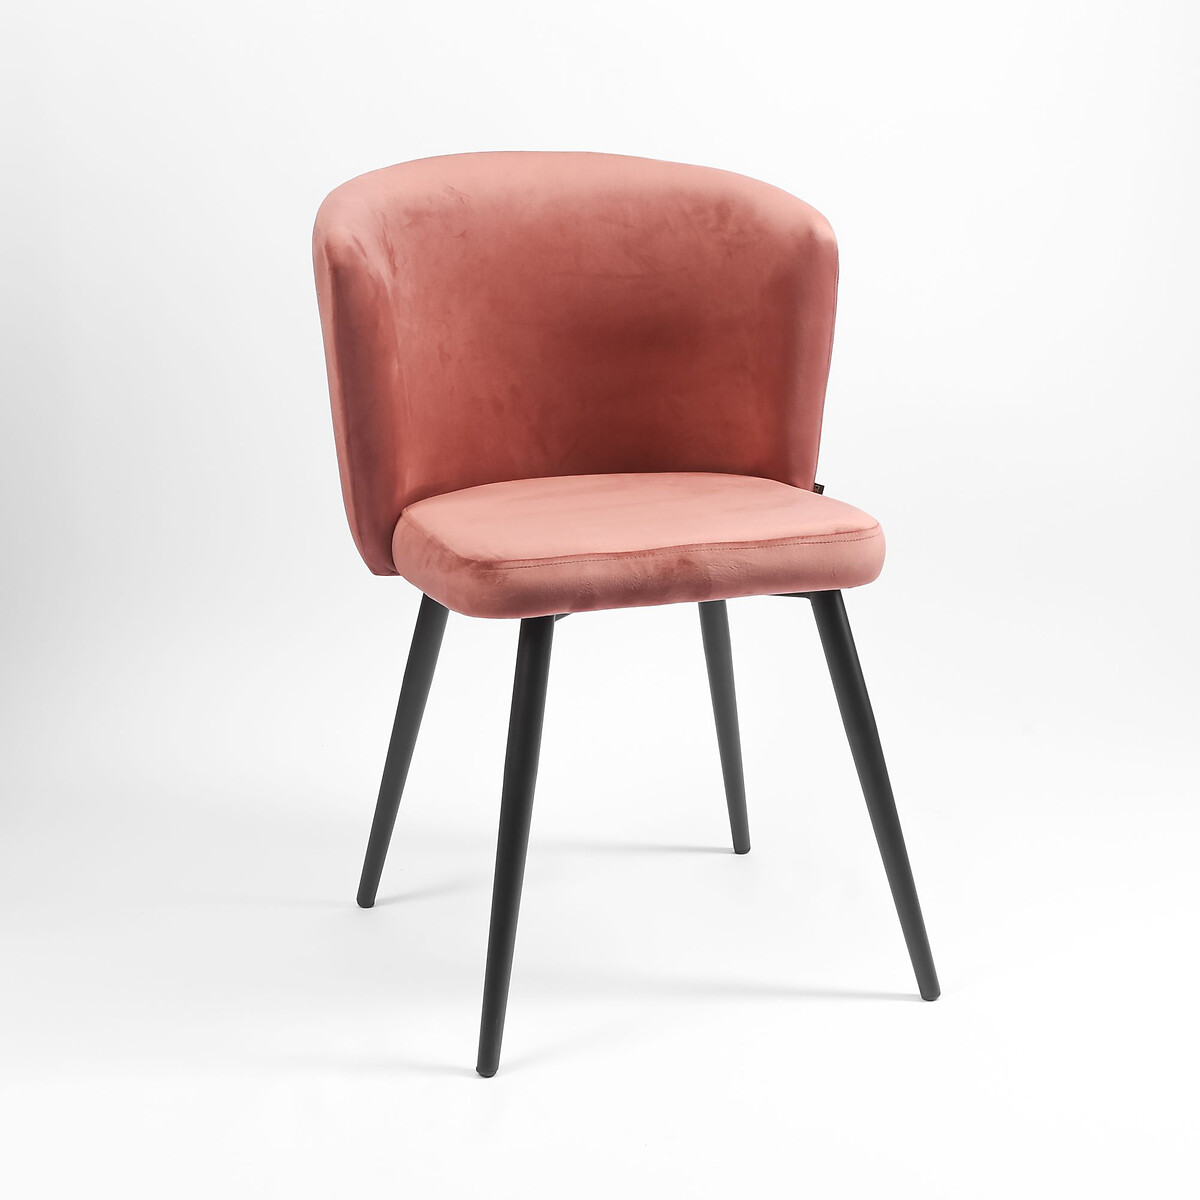 Стул Неаполь единый размер розовый стул eirill единый размер розовый